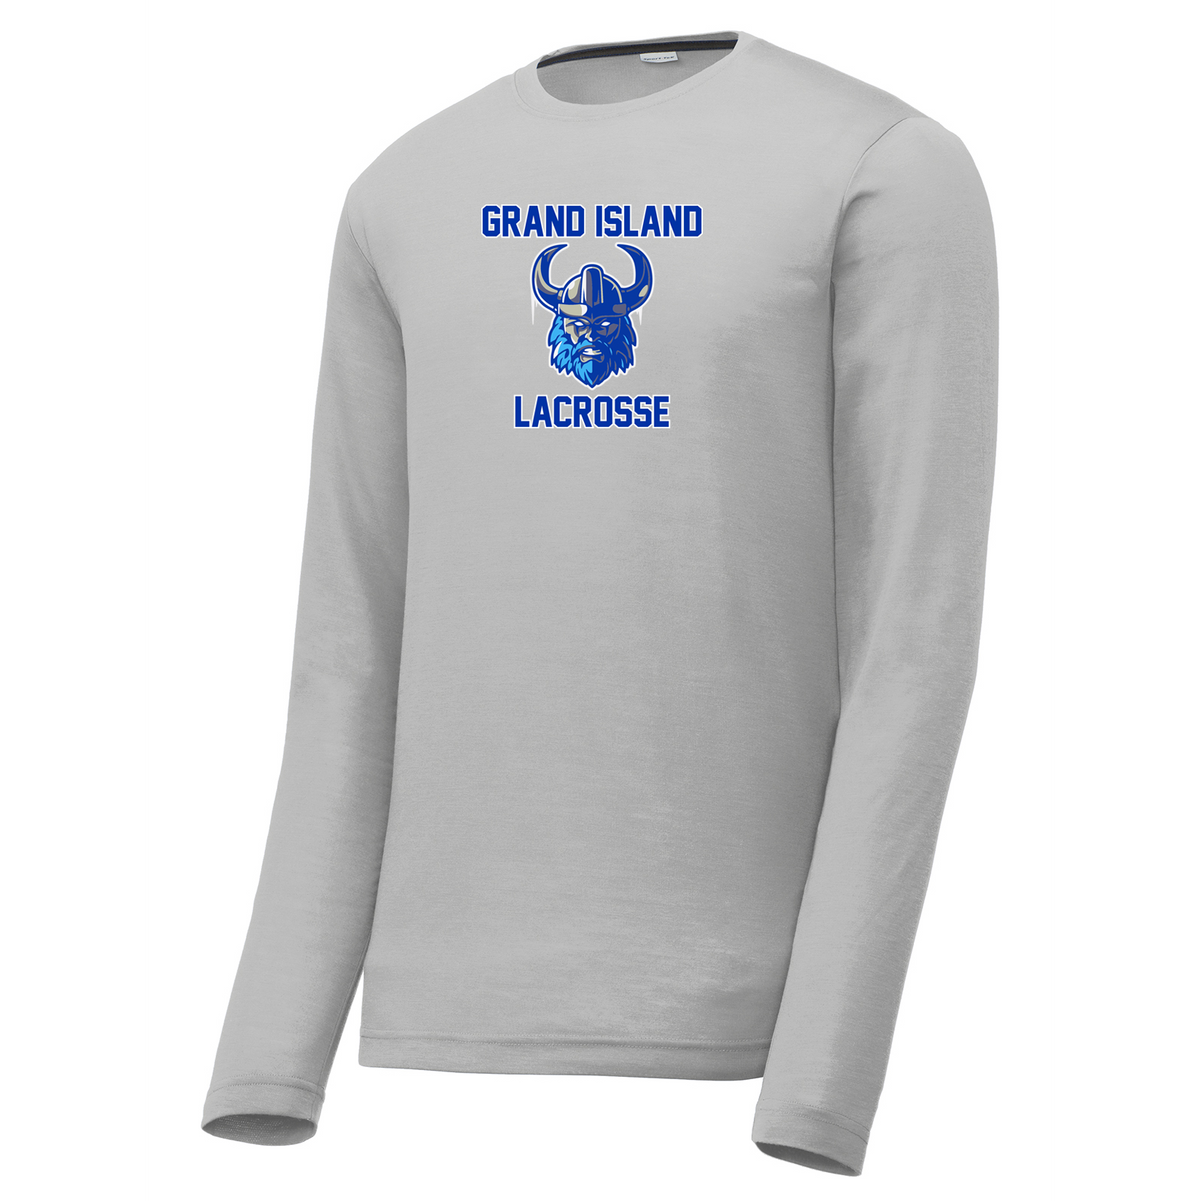 Grand Island Lacrosse Long Sleeve CottonTouch Performance Shirt